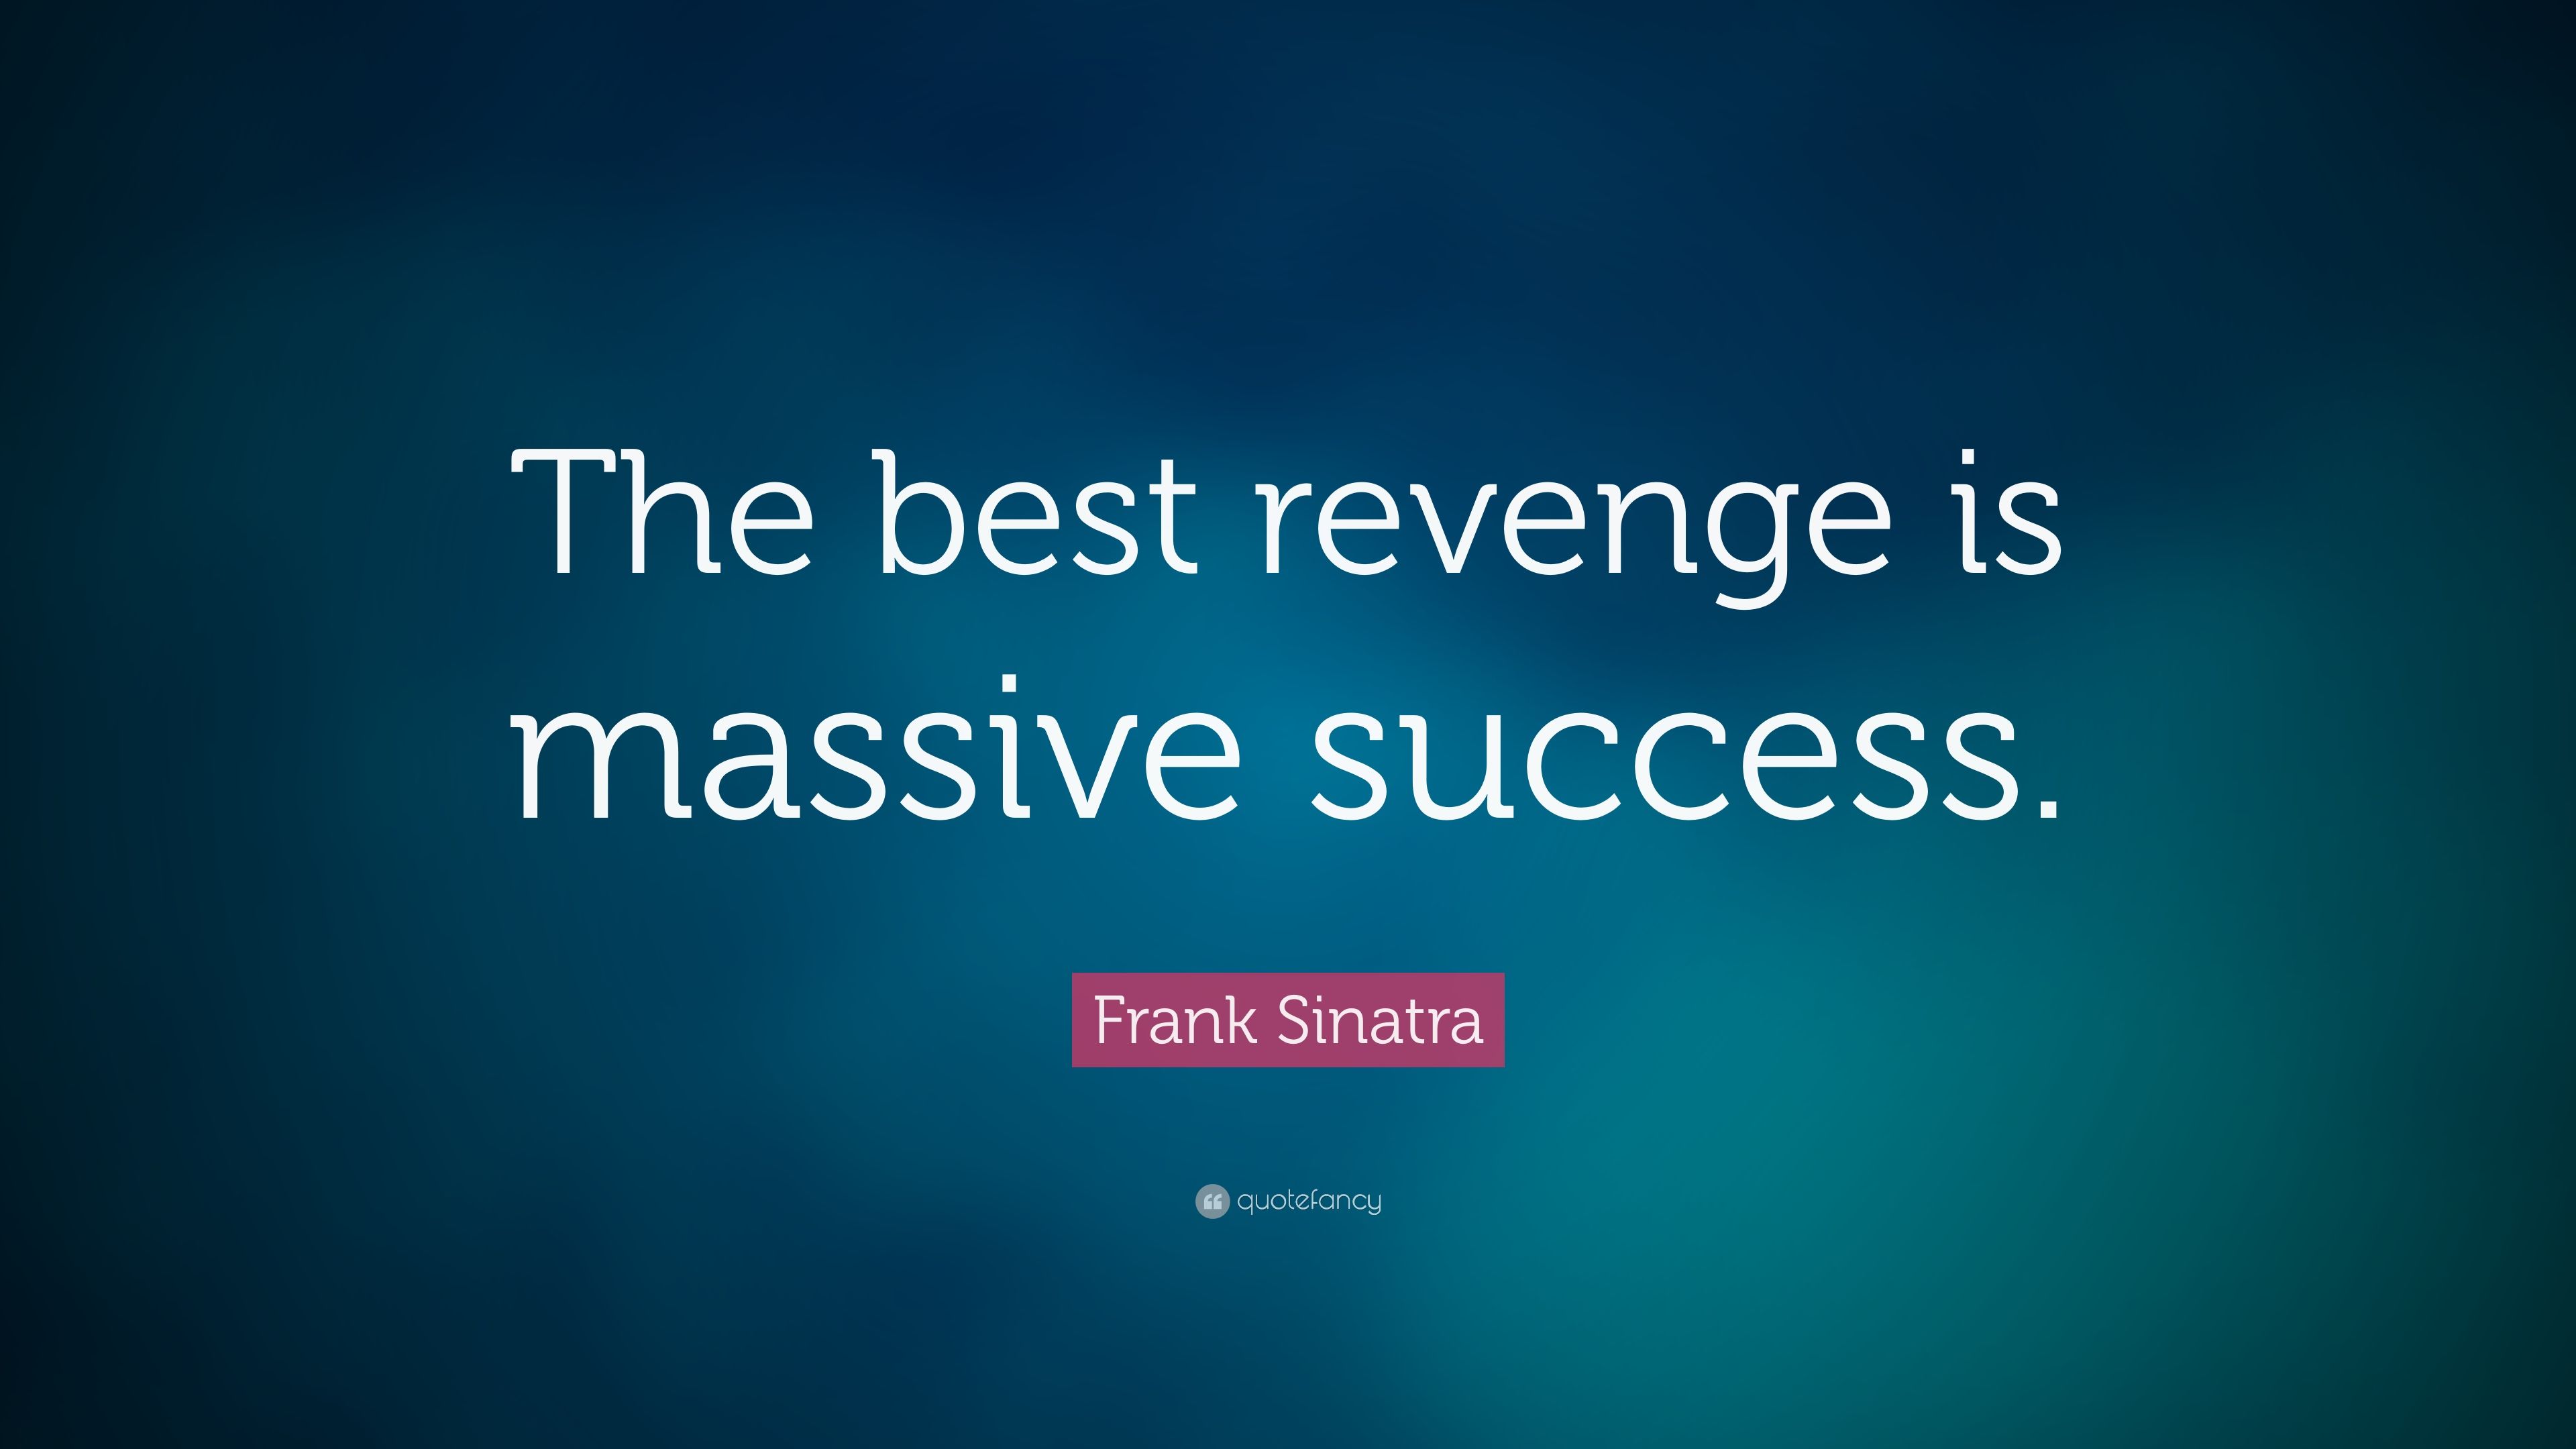 success is the best revenge wallpaper